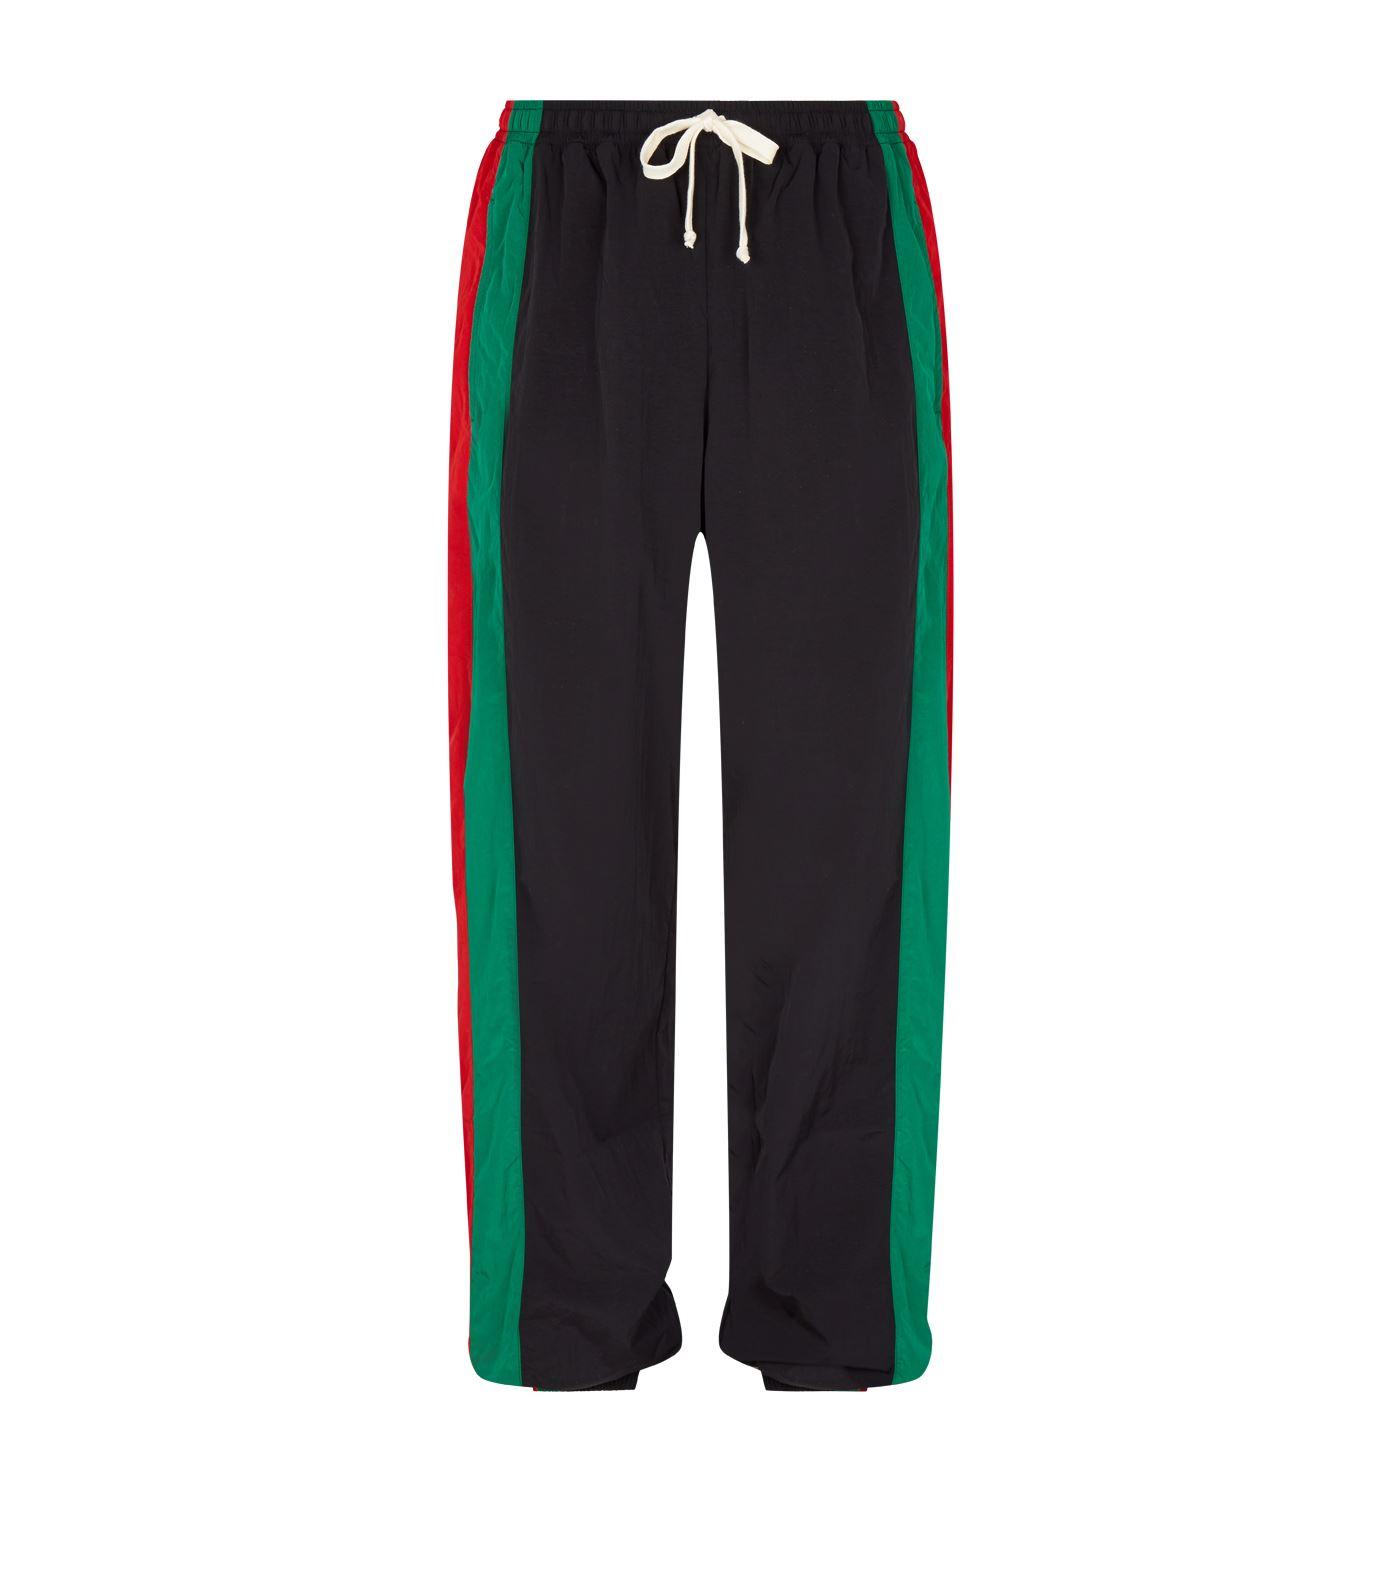 Gucci Synthetic Web Stripe Sweatpants in Black for Men - Lyst